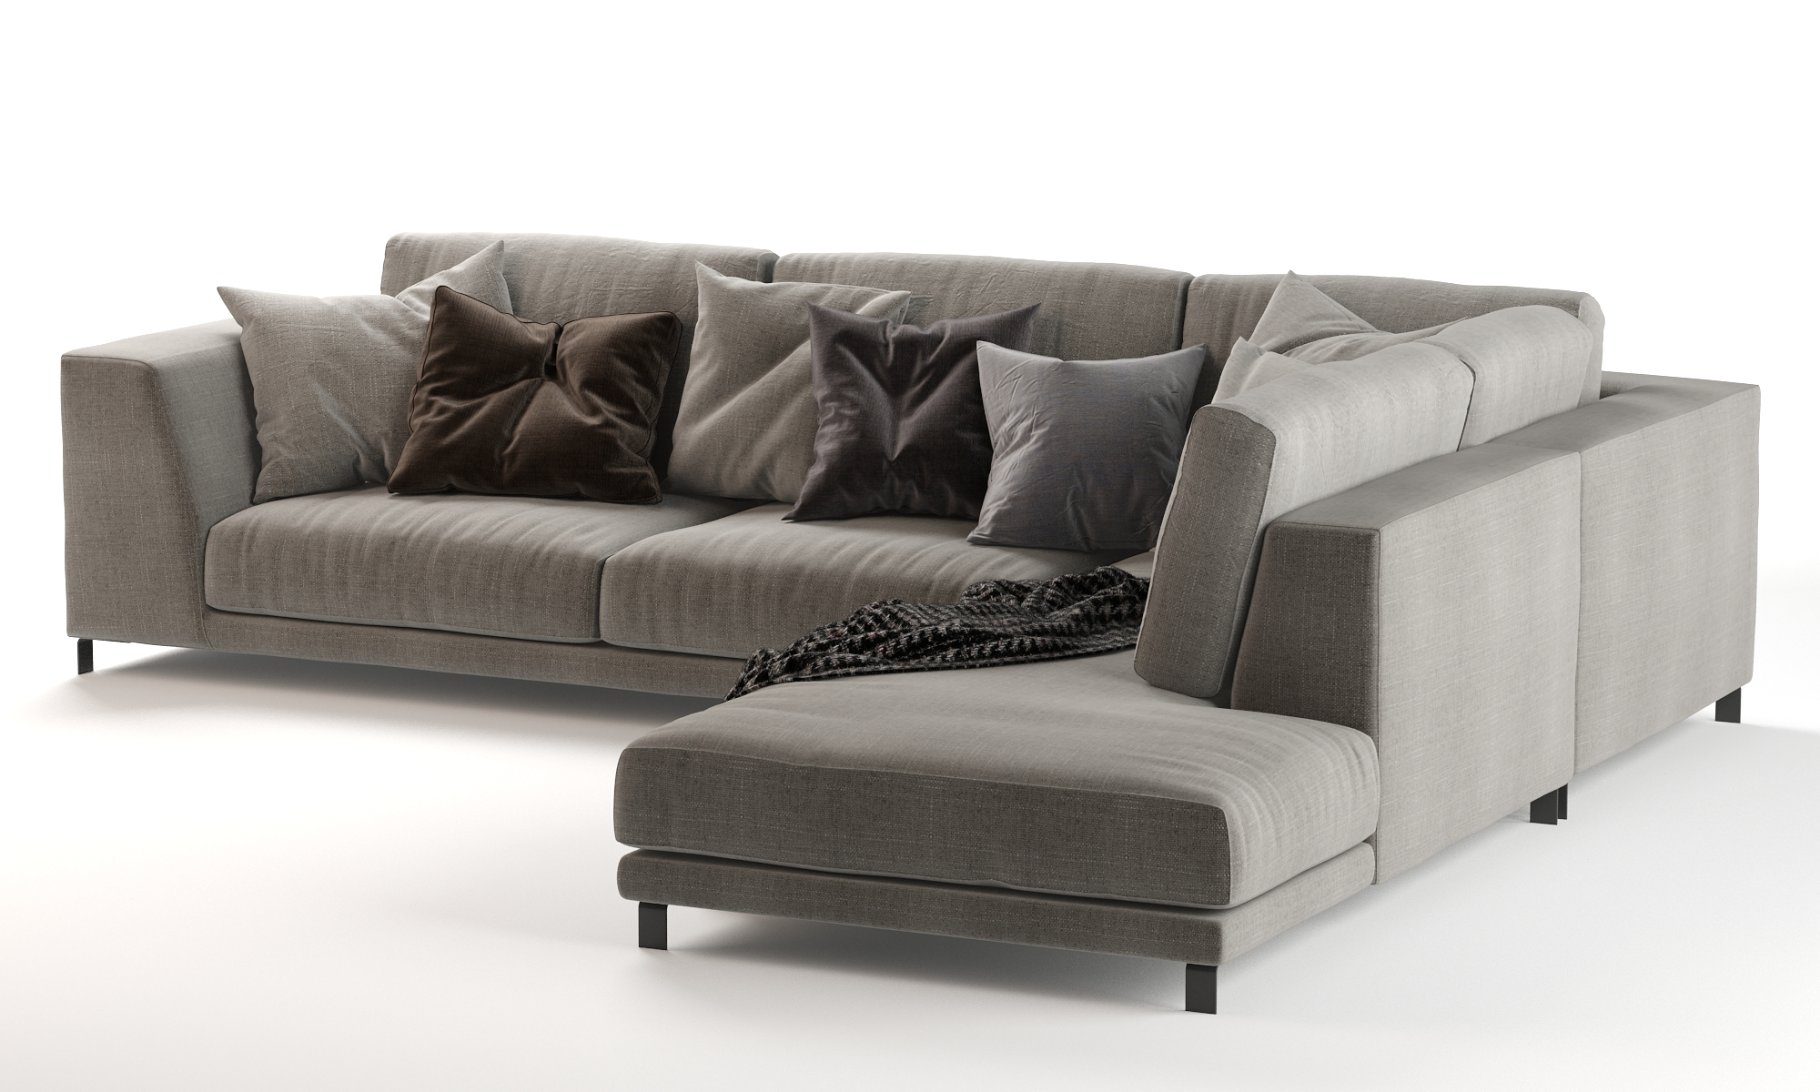 Rendering of an elegant 3d model of a corner sofa